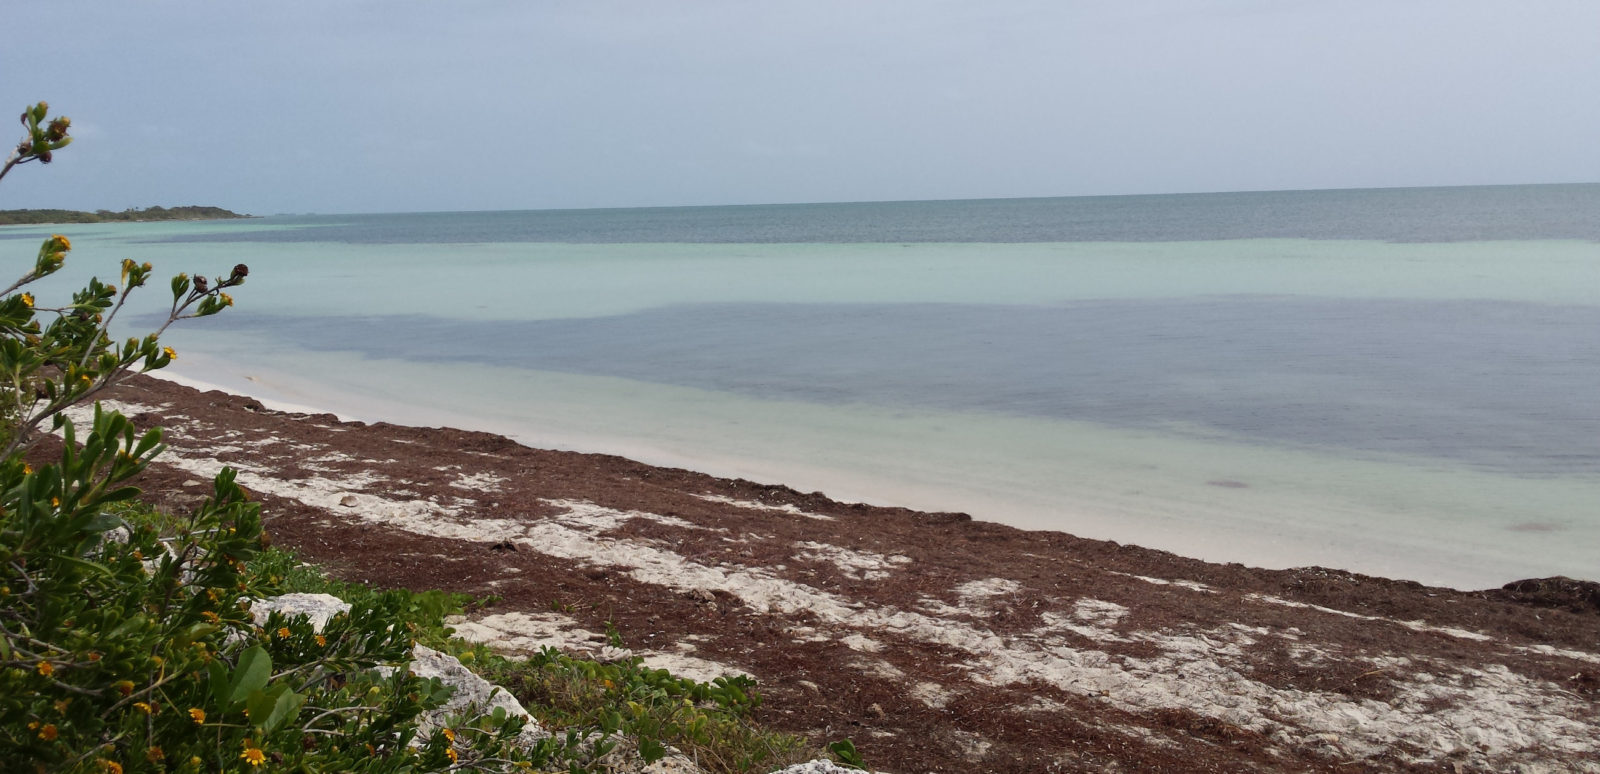 Beach at Bahia Honda with seaweed